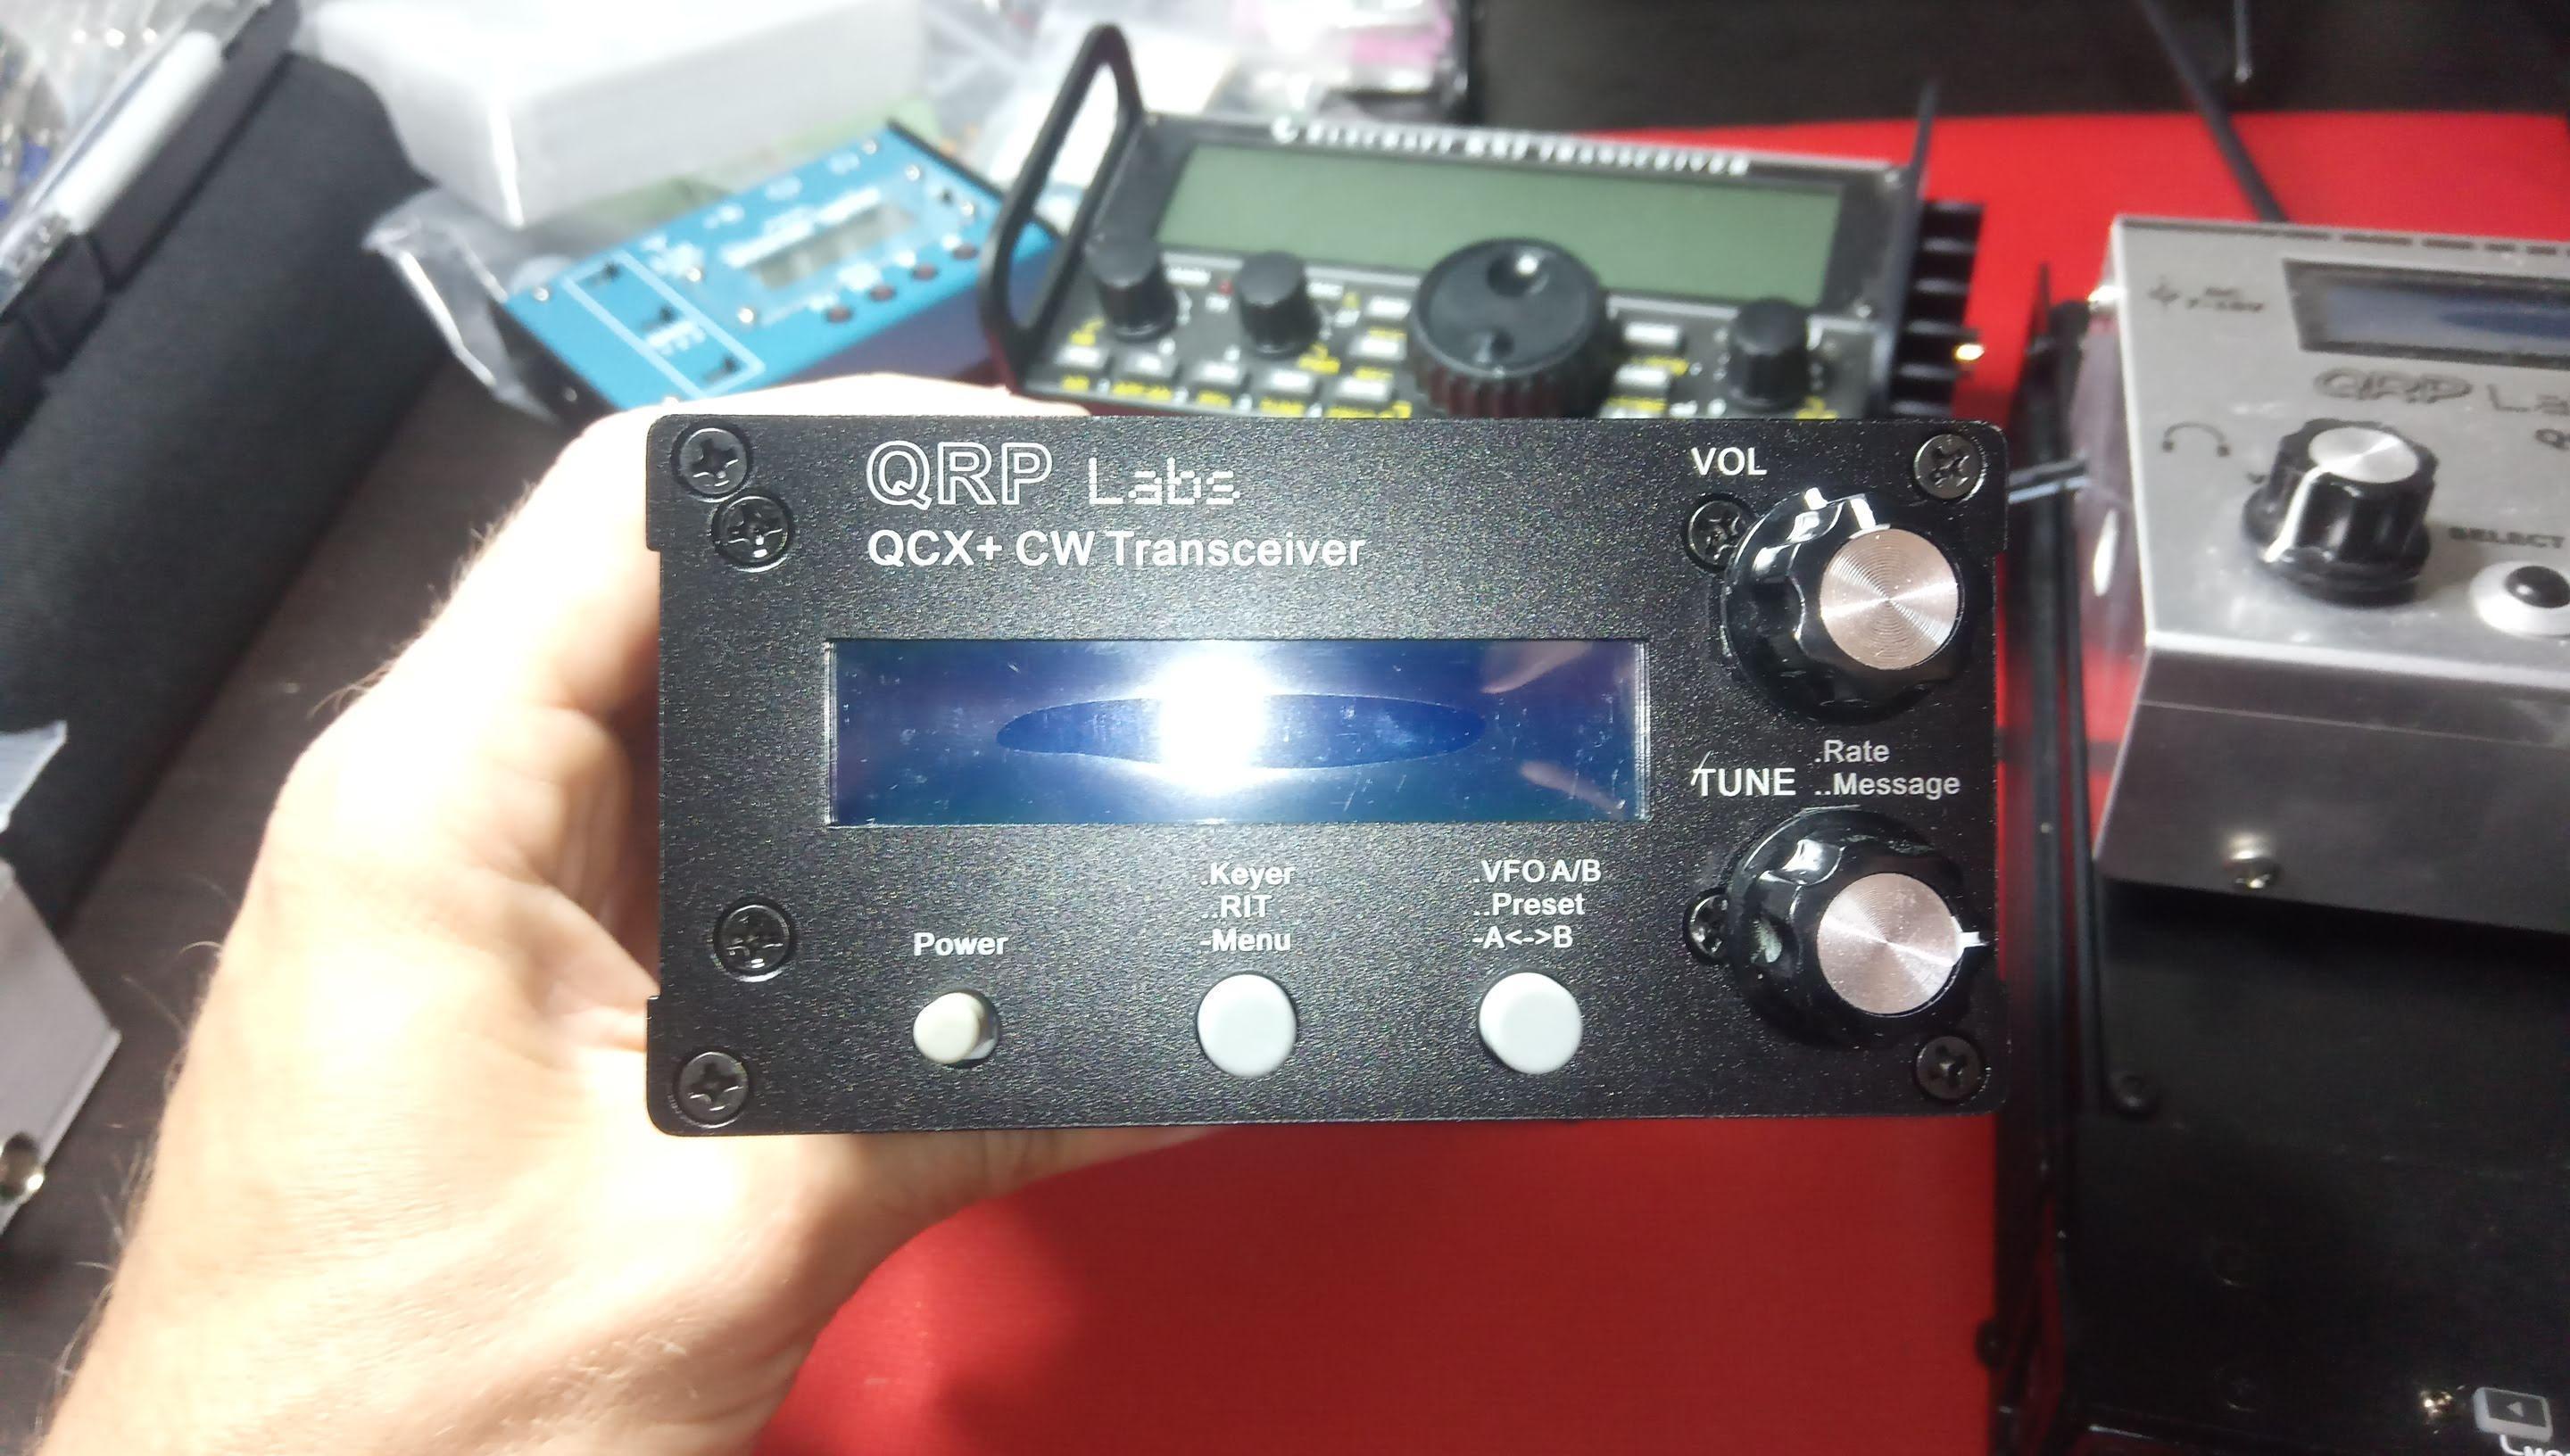 QCX+ CW radio kit from QRP Labs